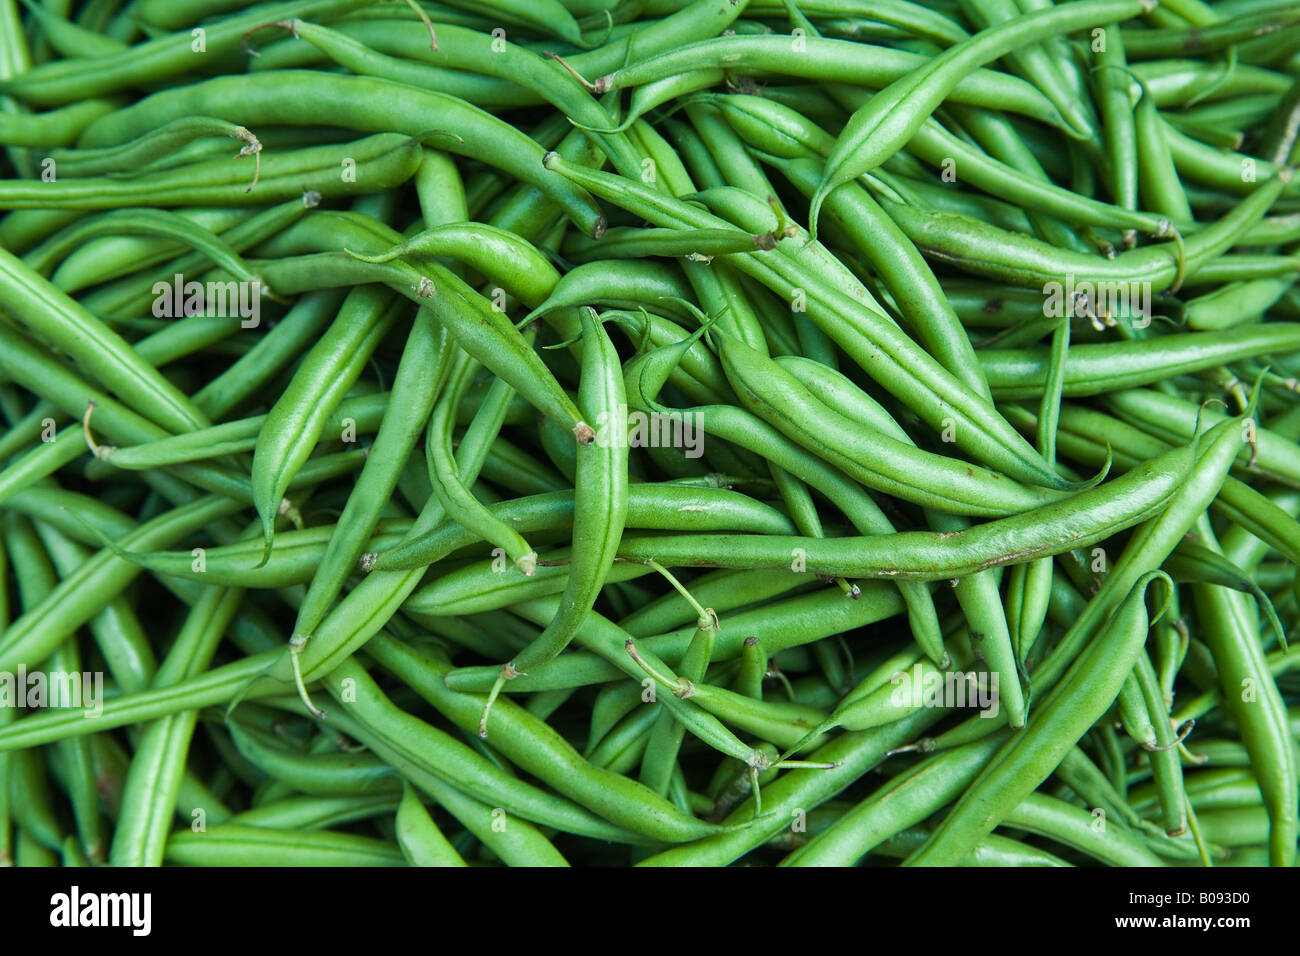 Common green beans (Phaseolus vulgaris) Stock Photo